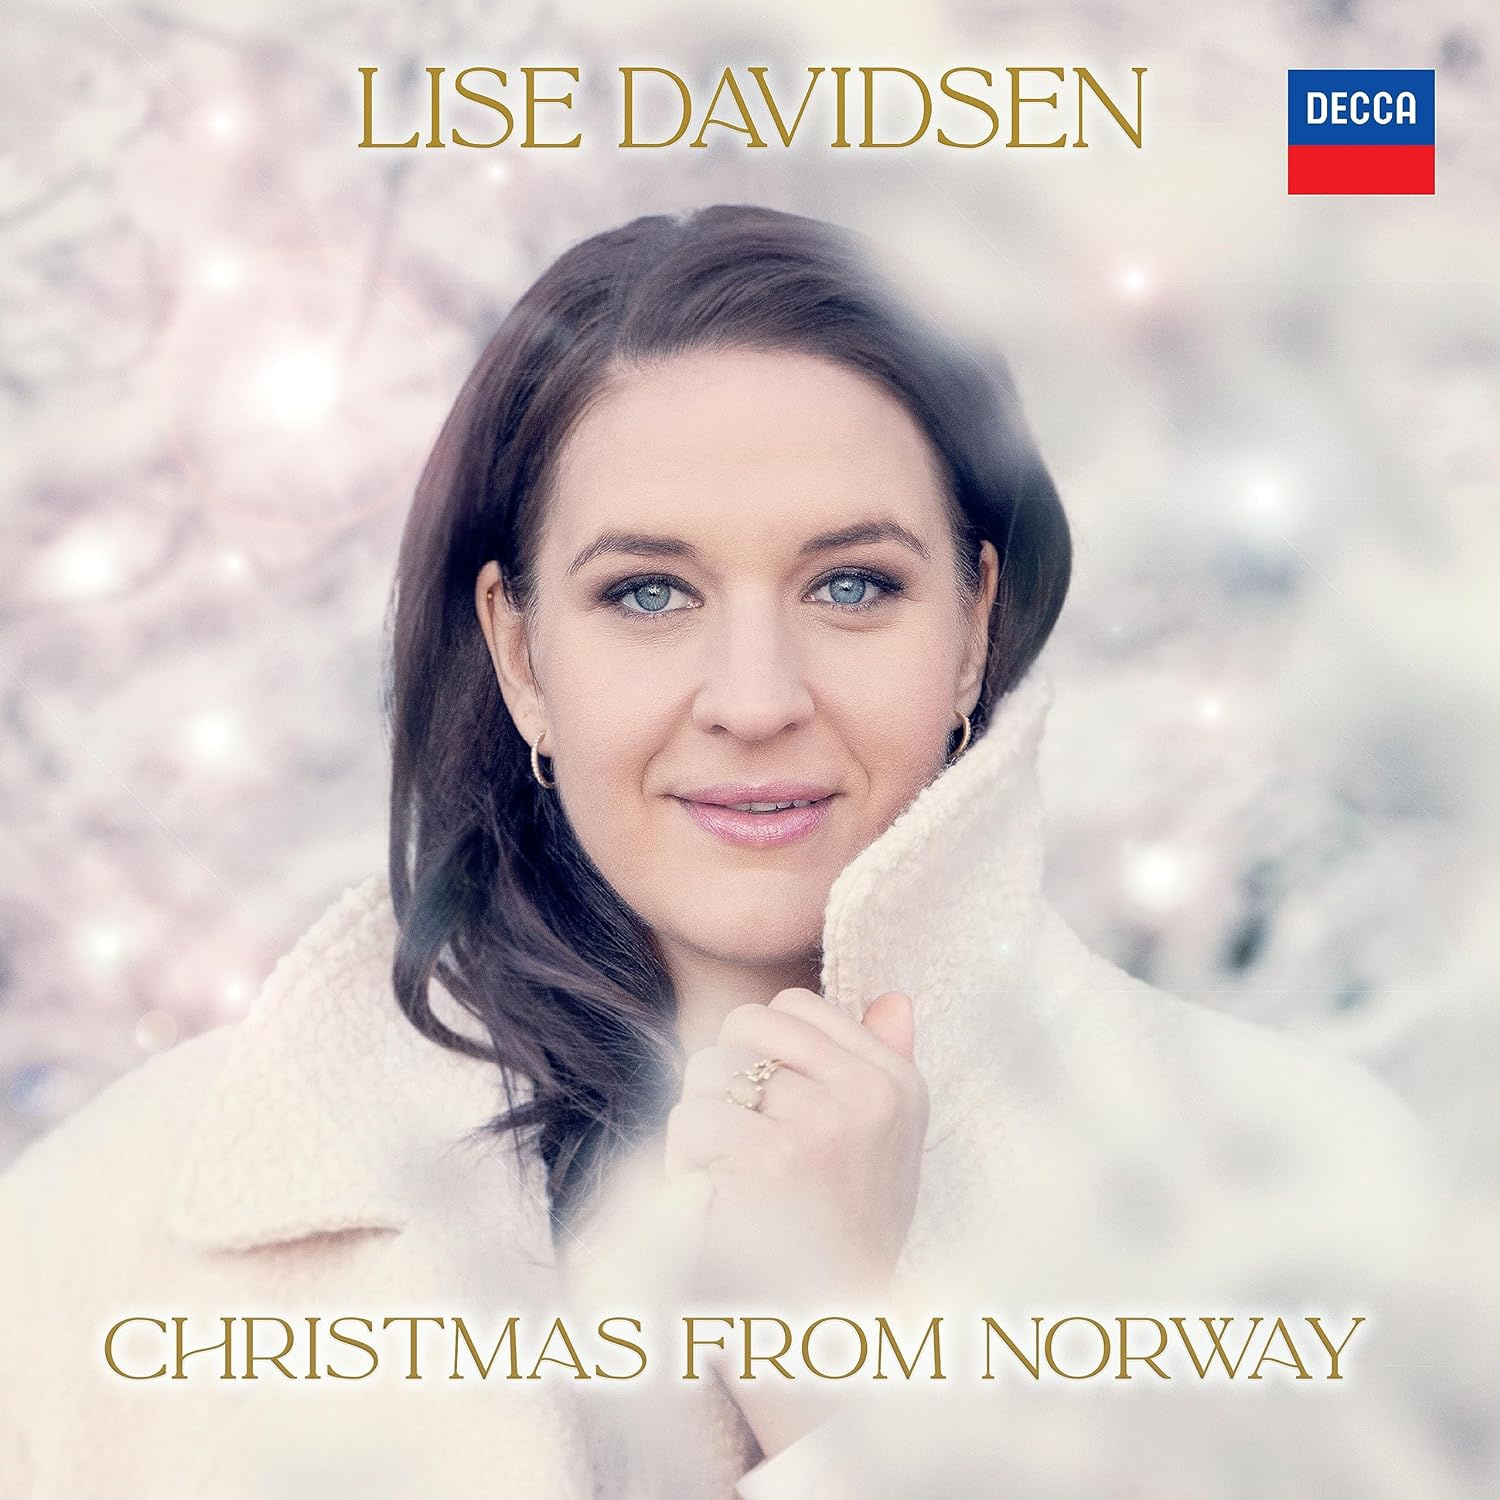 Lise Davidsen - Christmas from Norway vinyl cover